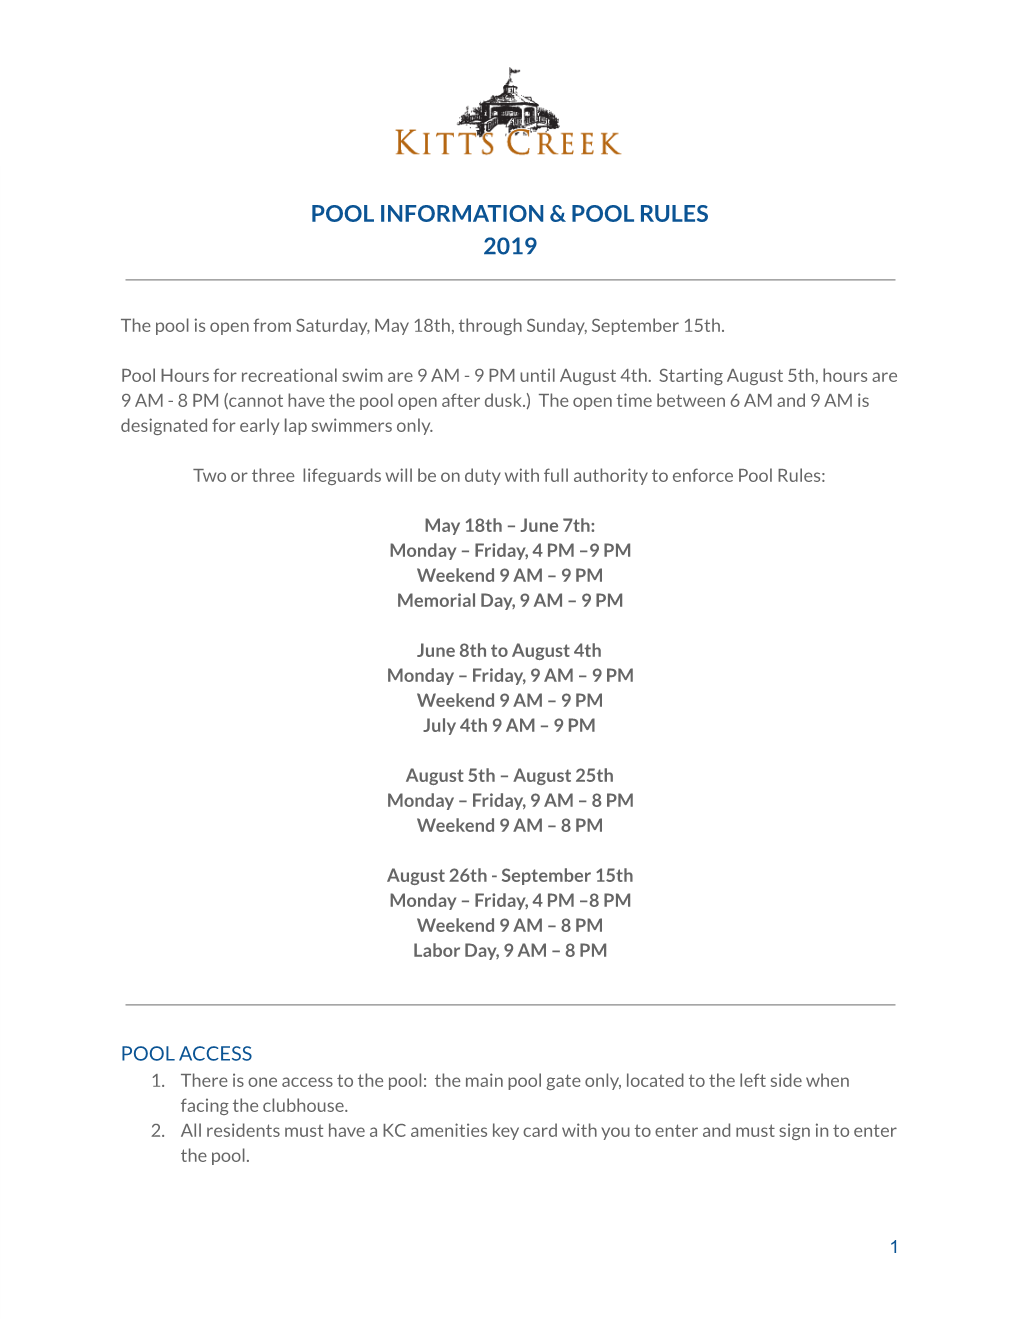 Pool Information & Pool Rules 2019